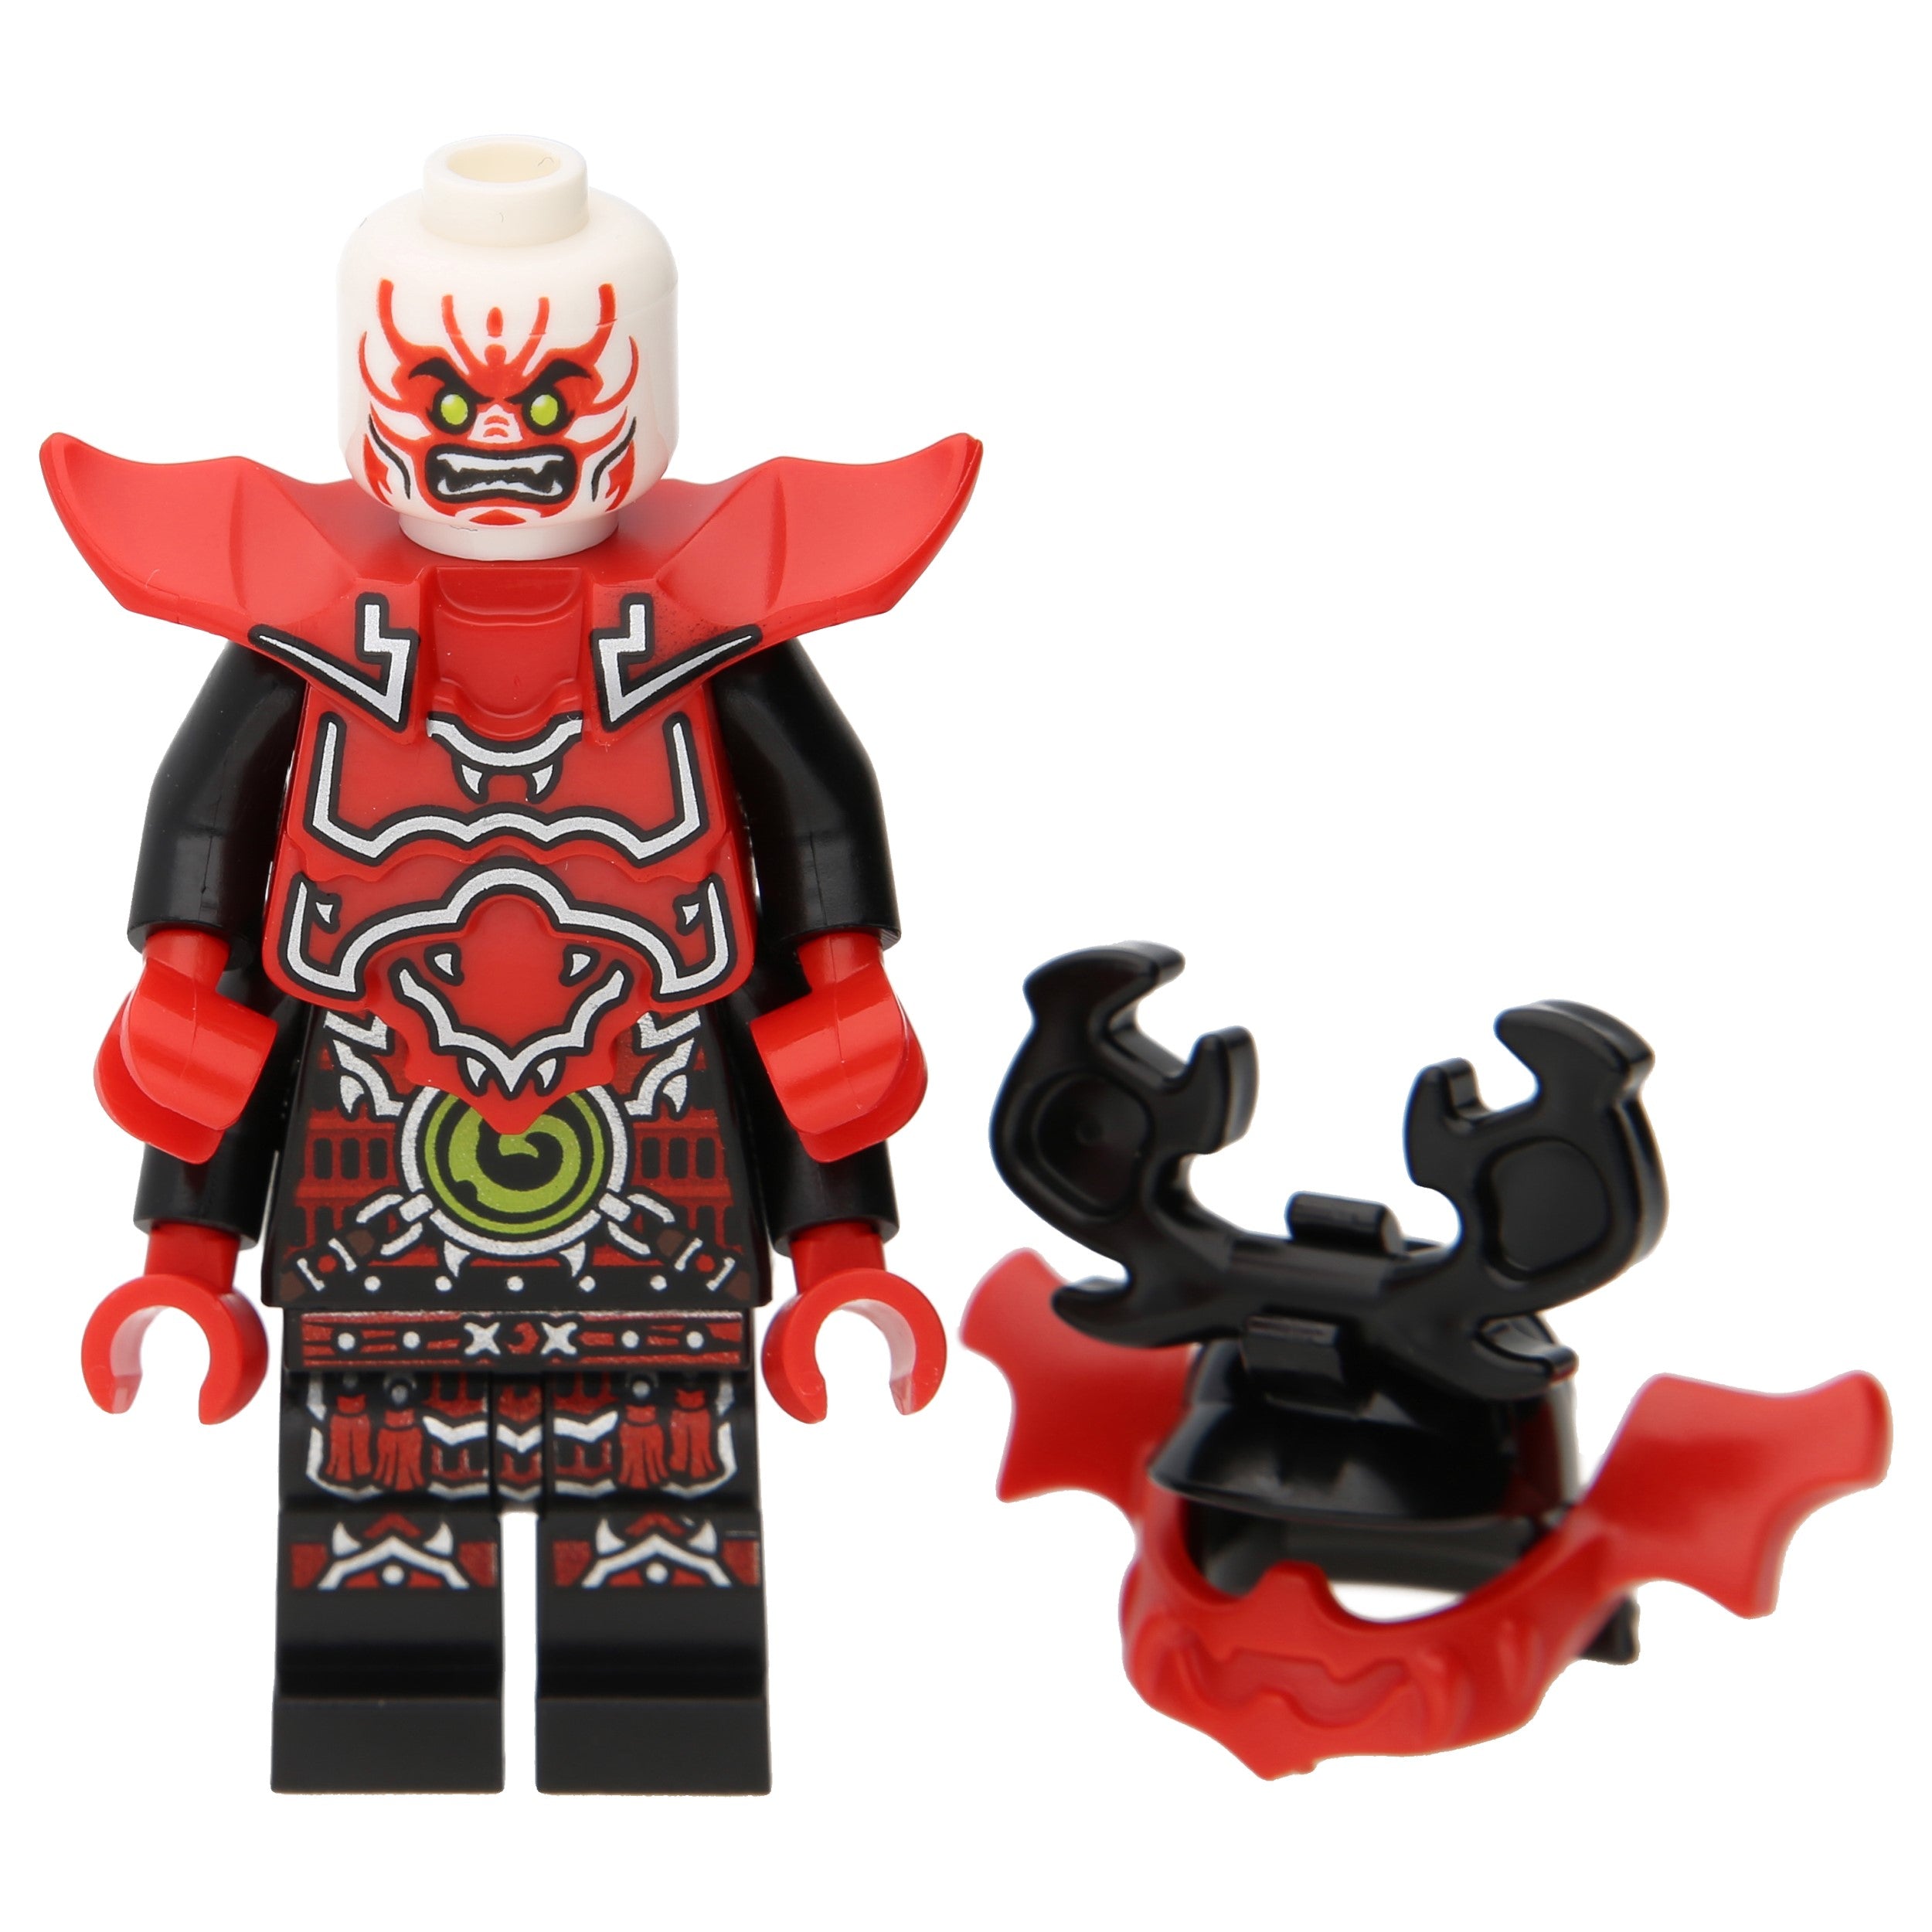 LEGO Ninjago Minifigure - General Kozu (black)